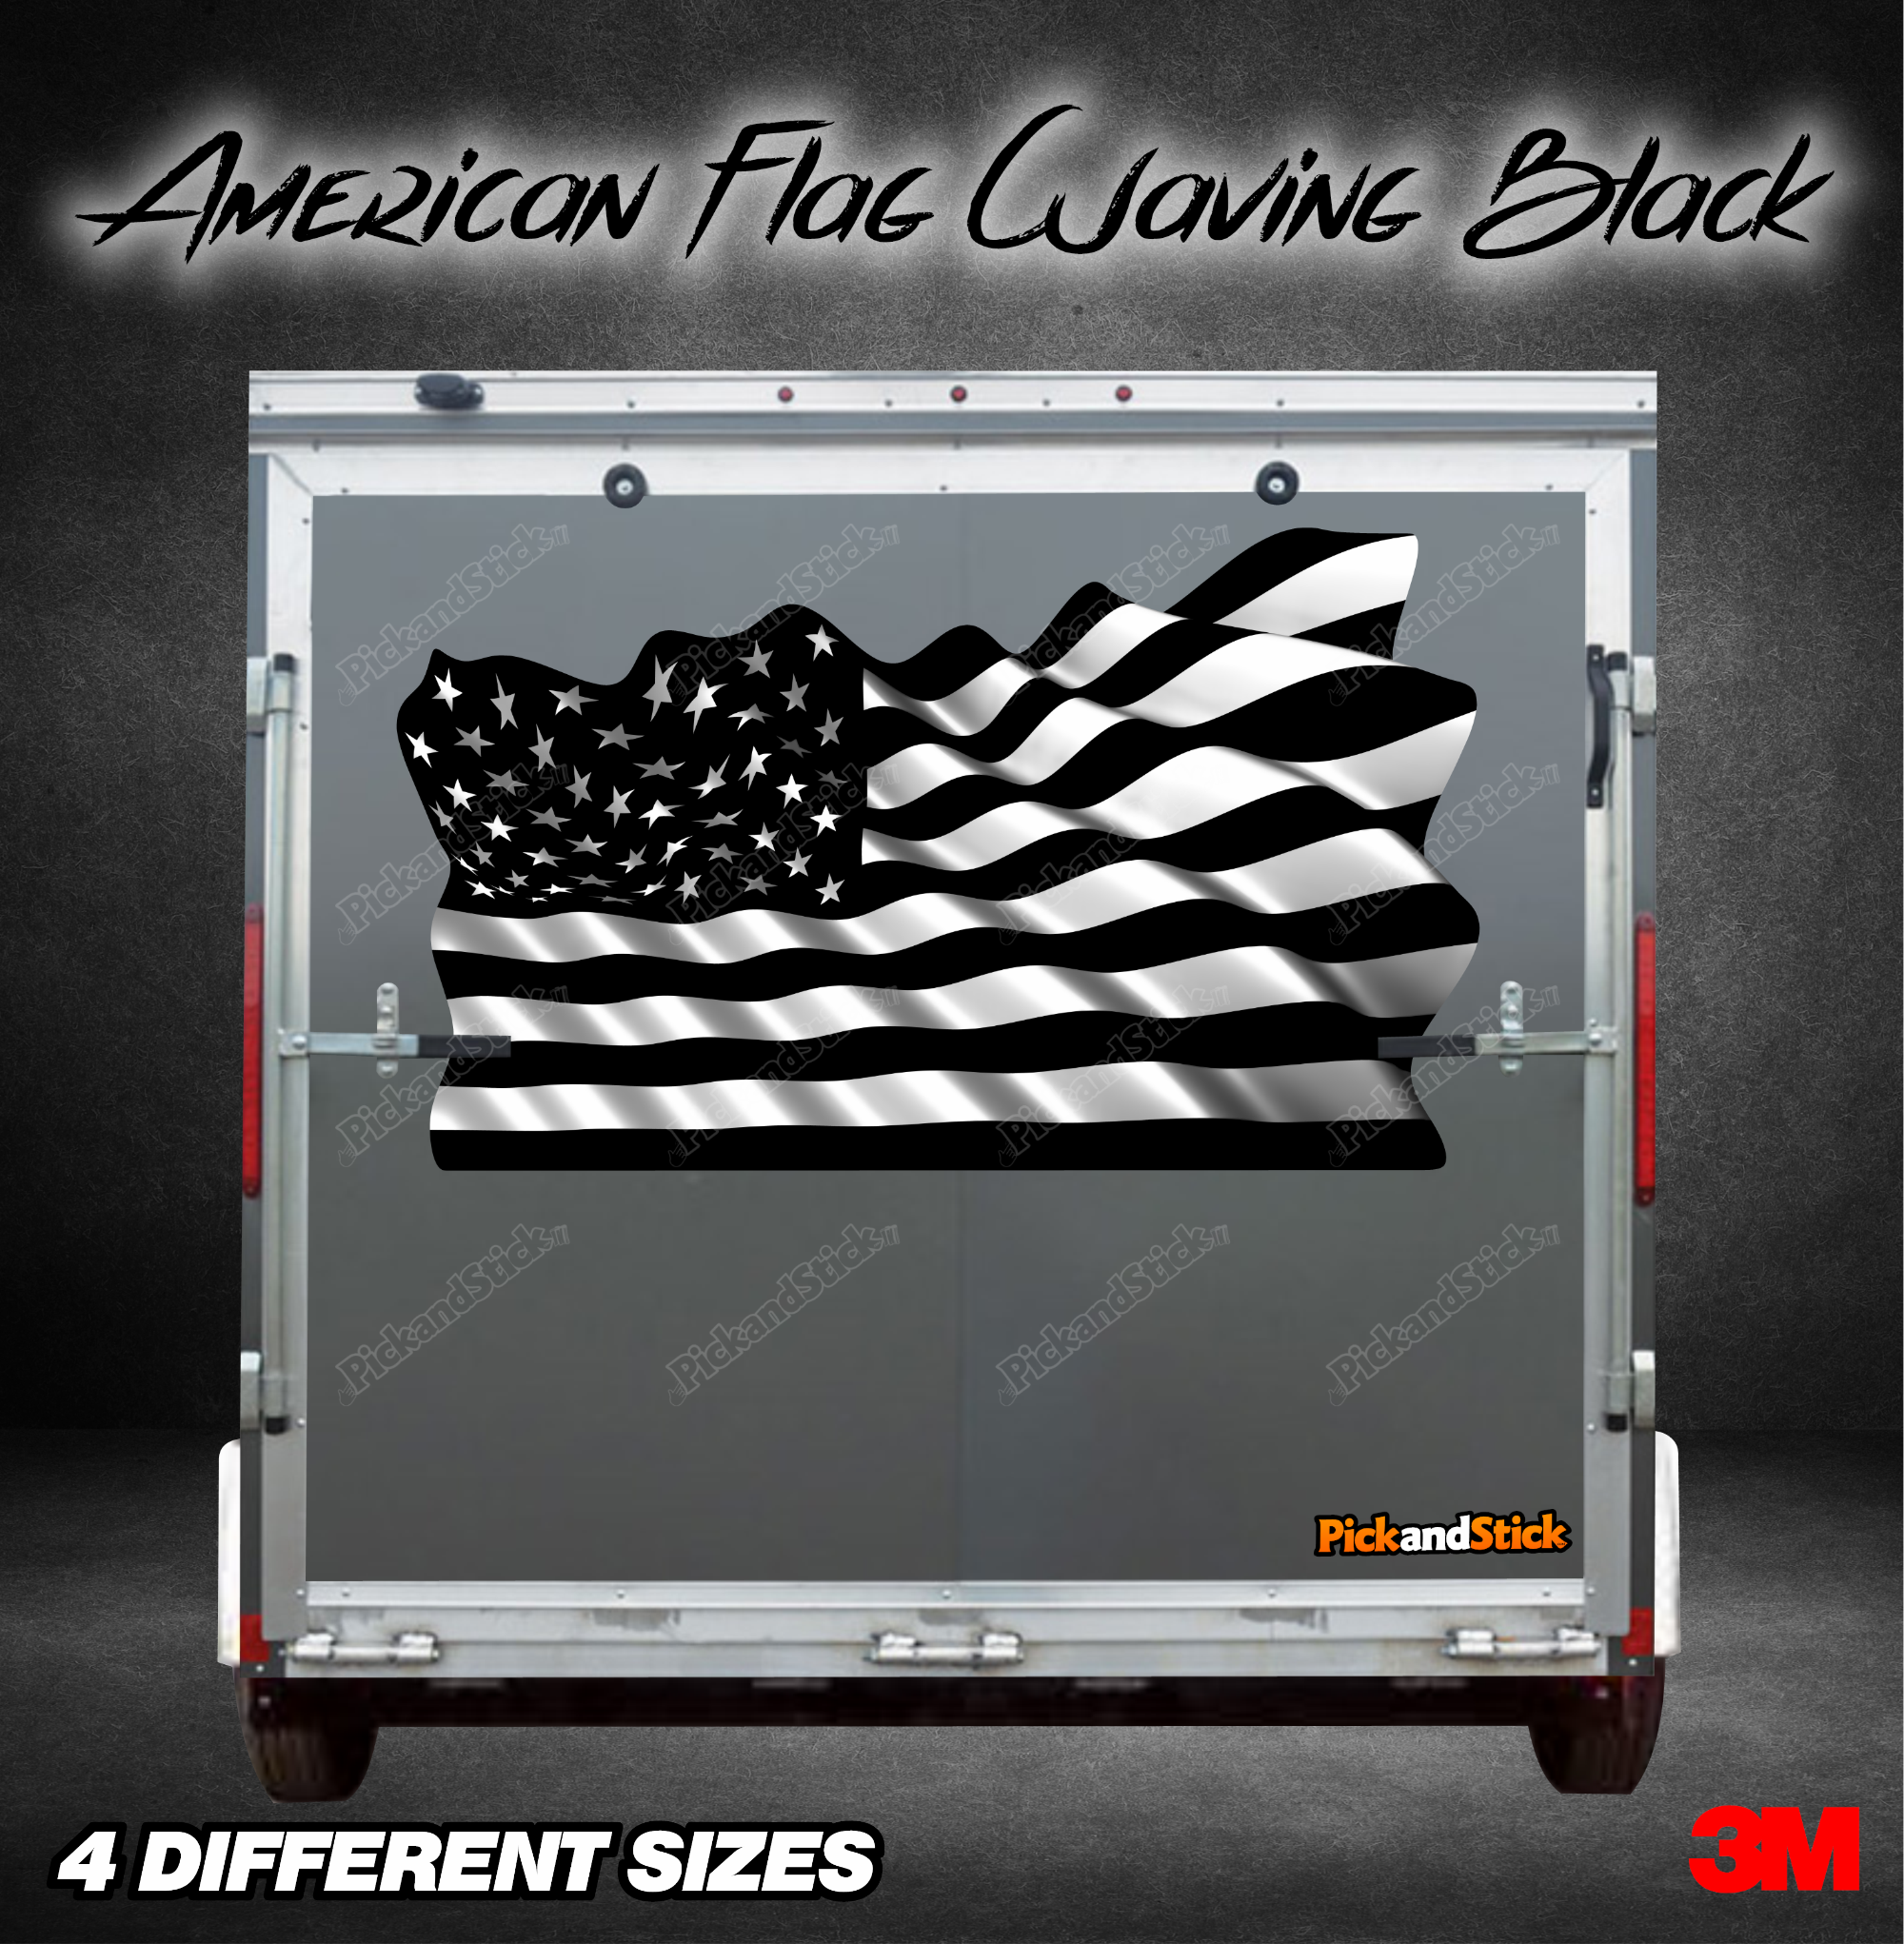 American Flag Waving Black Graphic - PickandStickcom